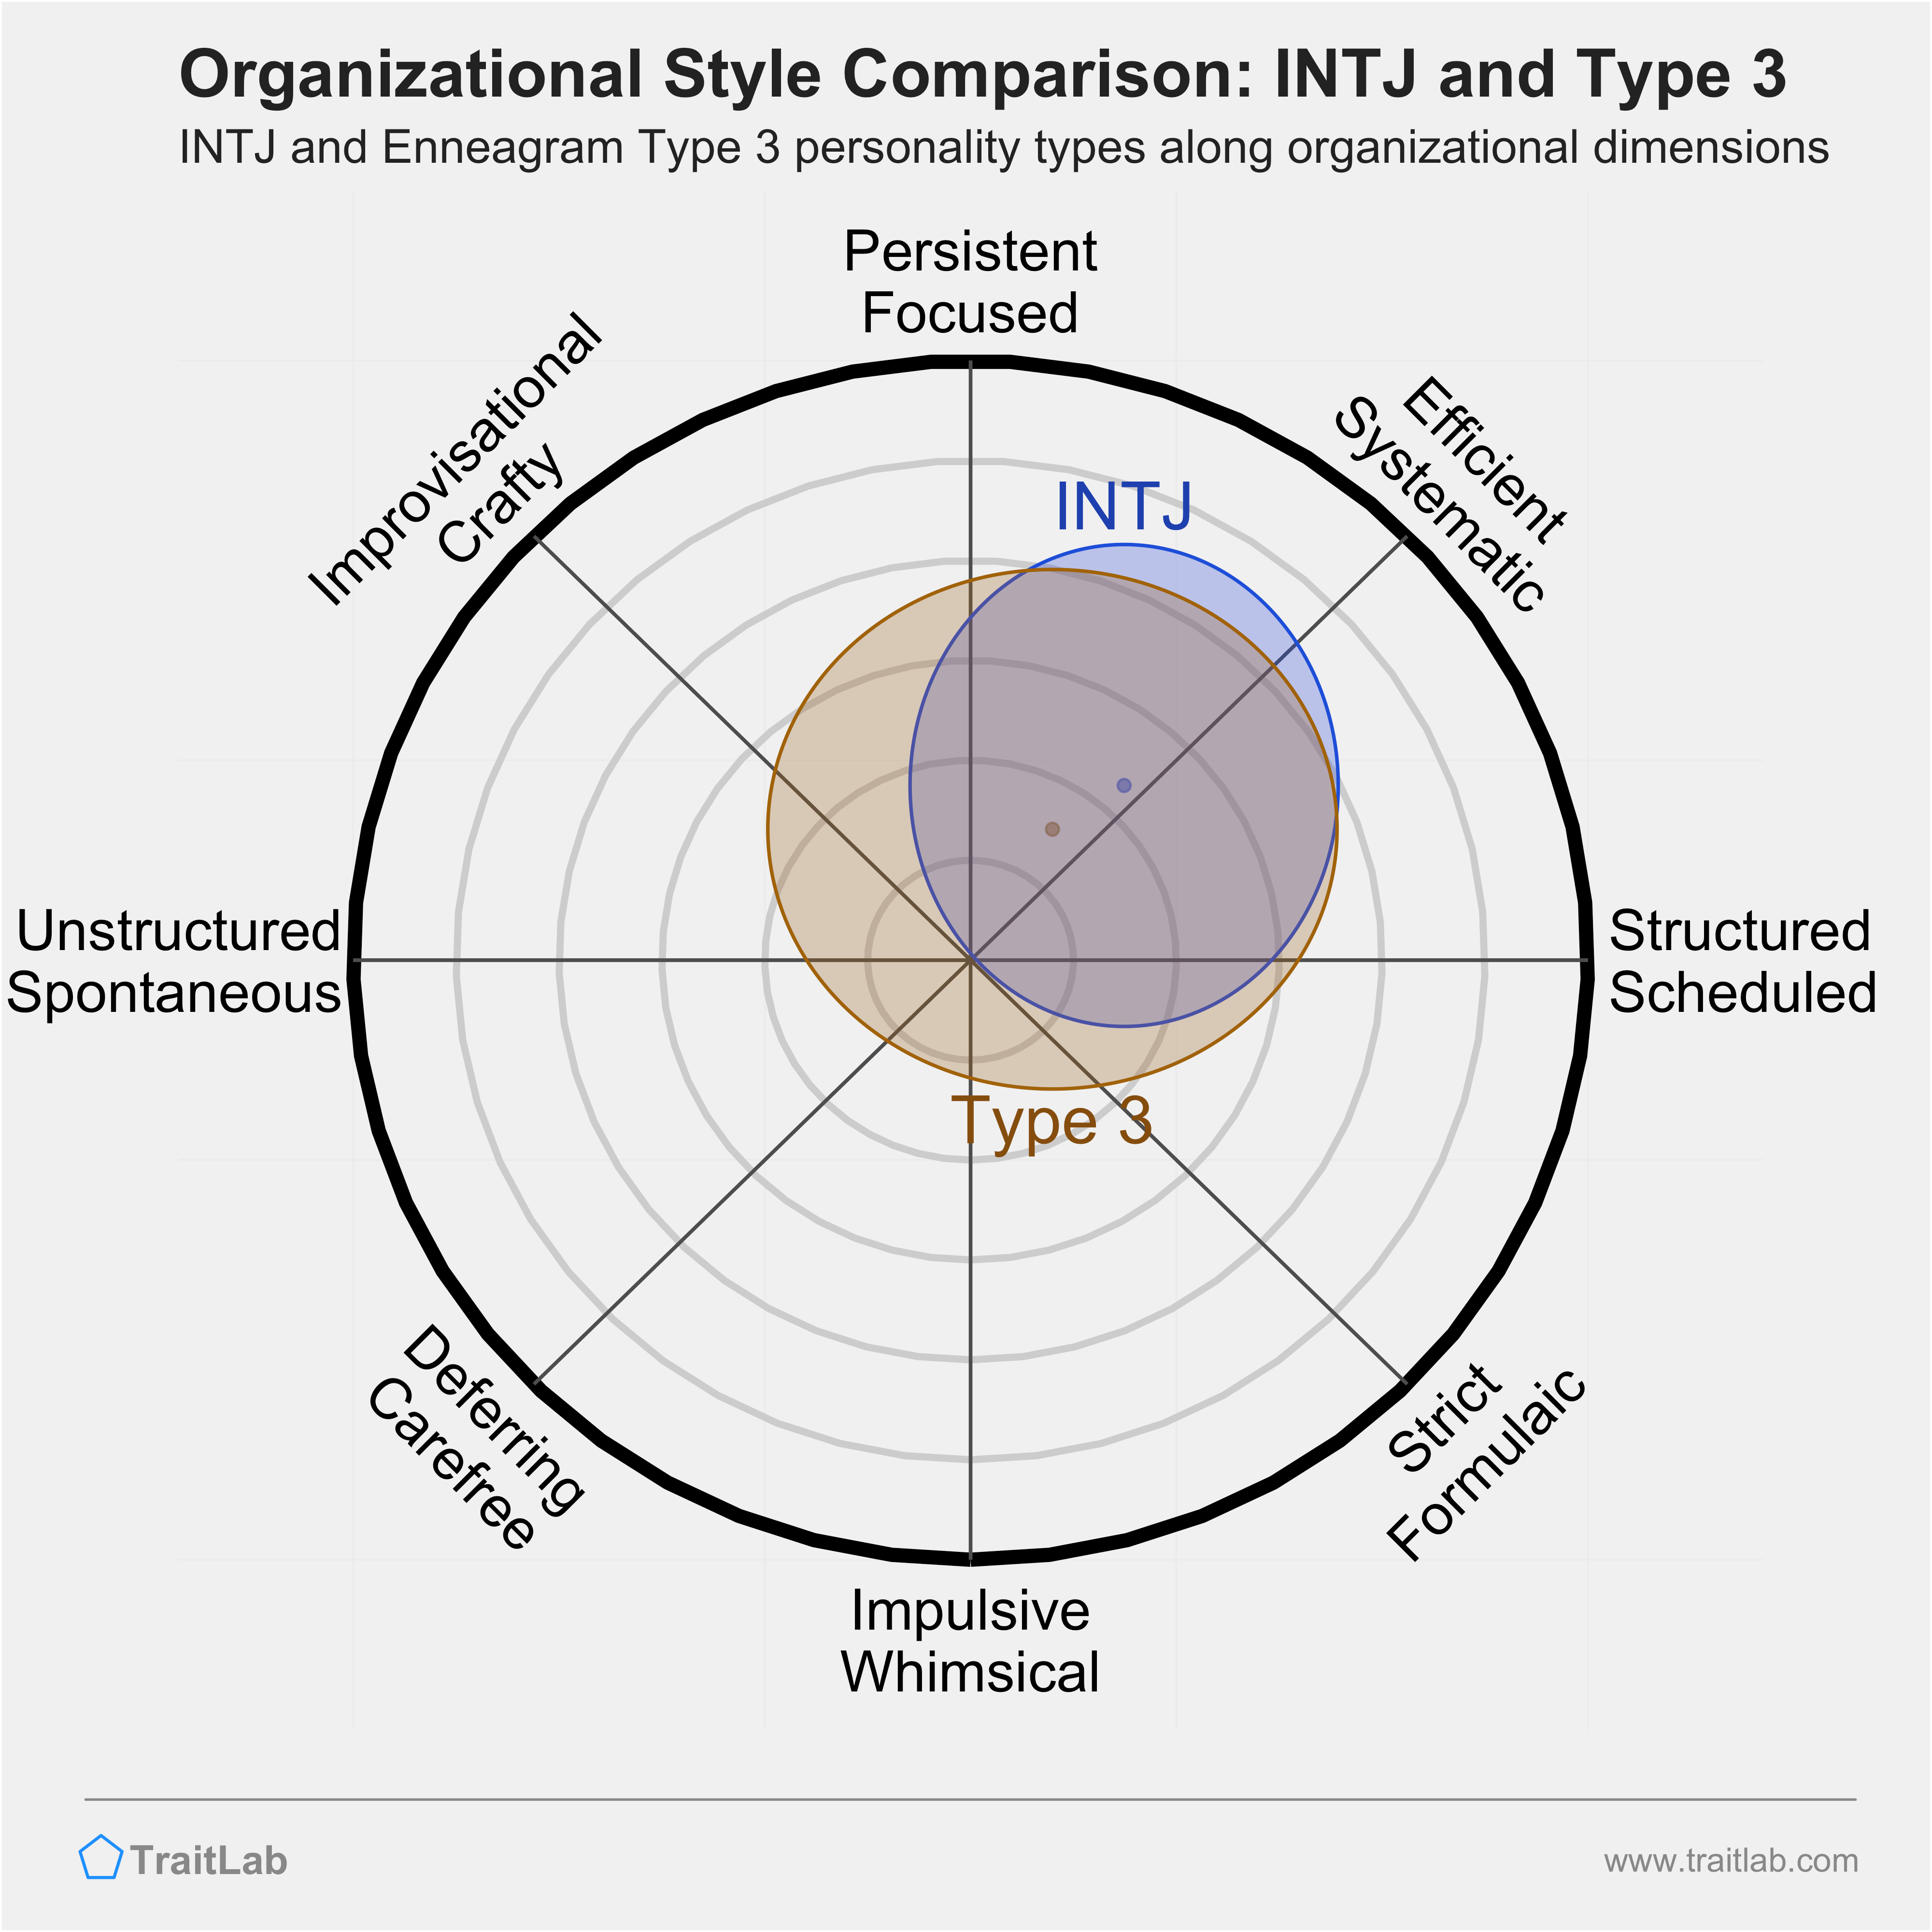 INTJ and Type 3 comparison across organizational dimensions